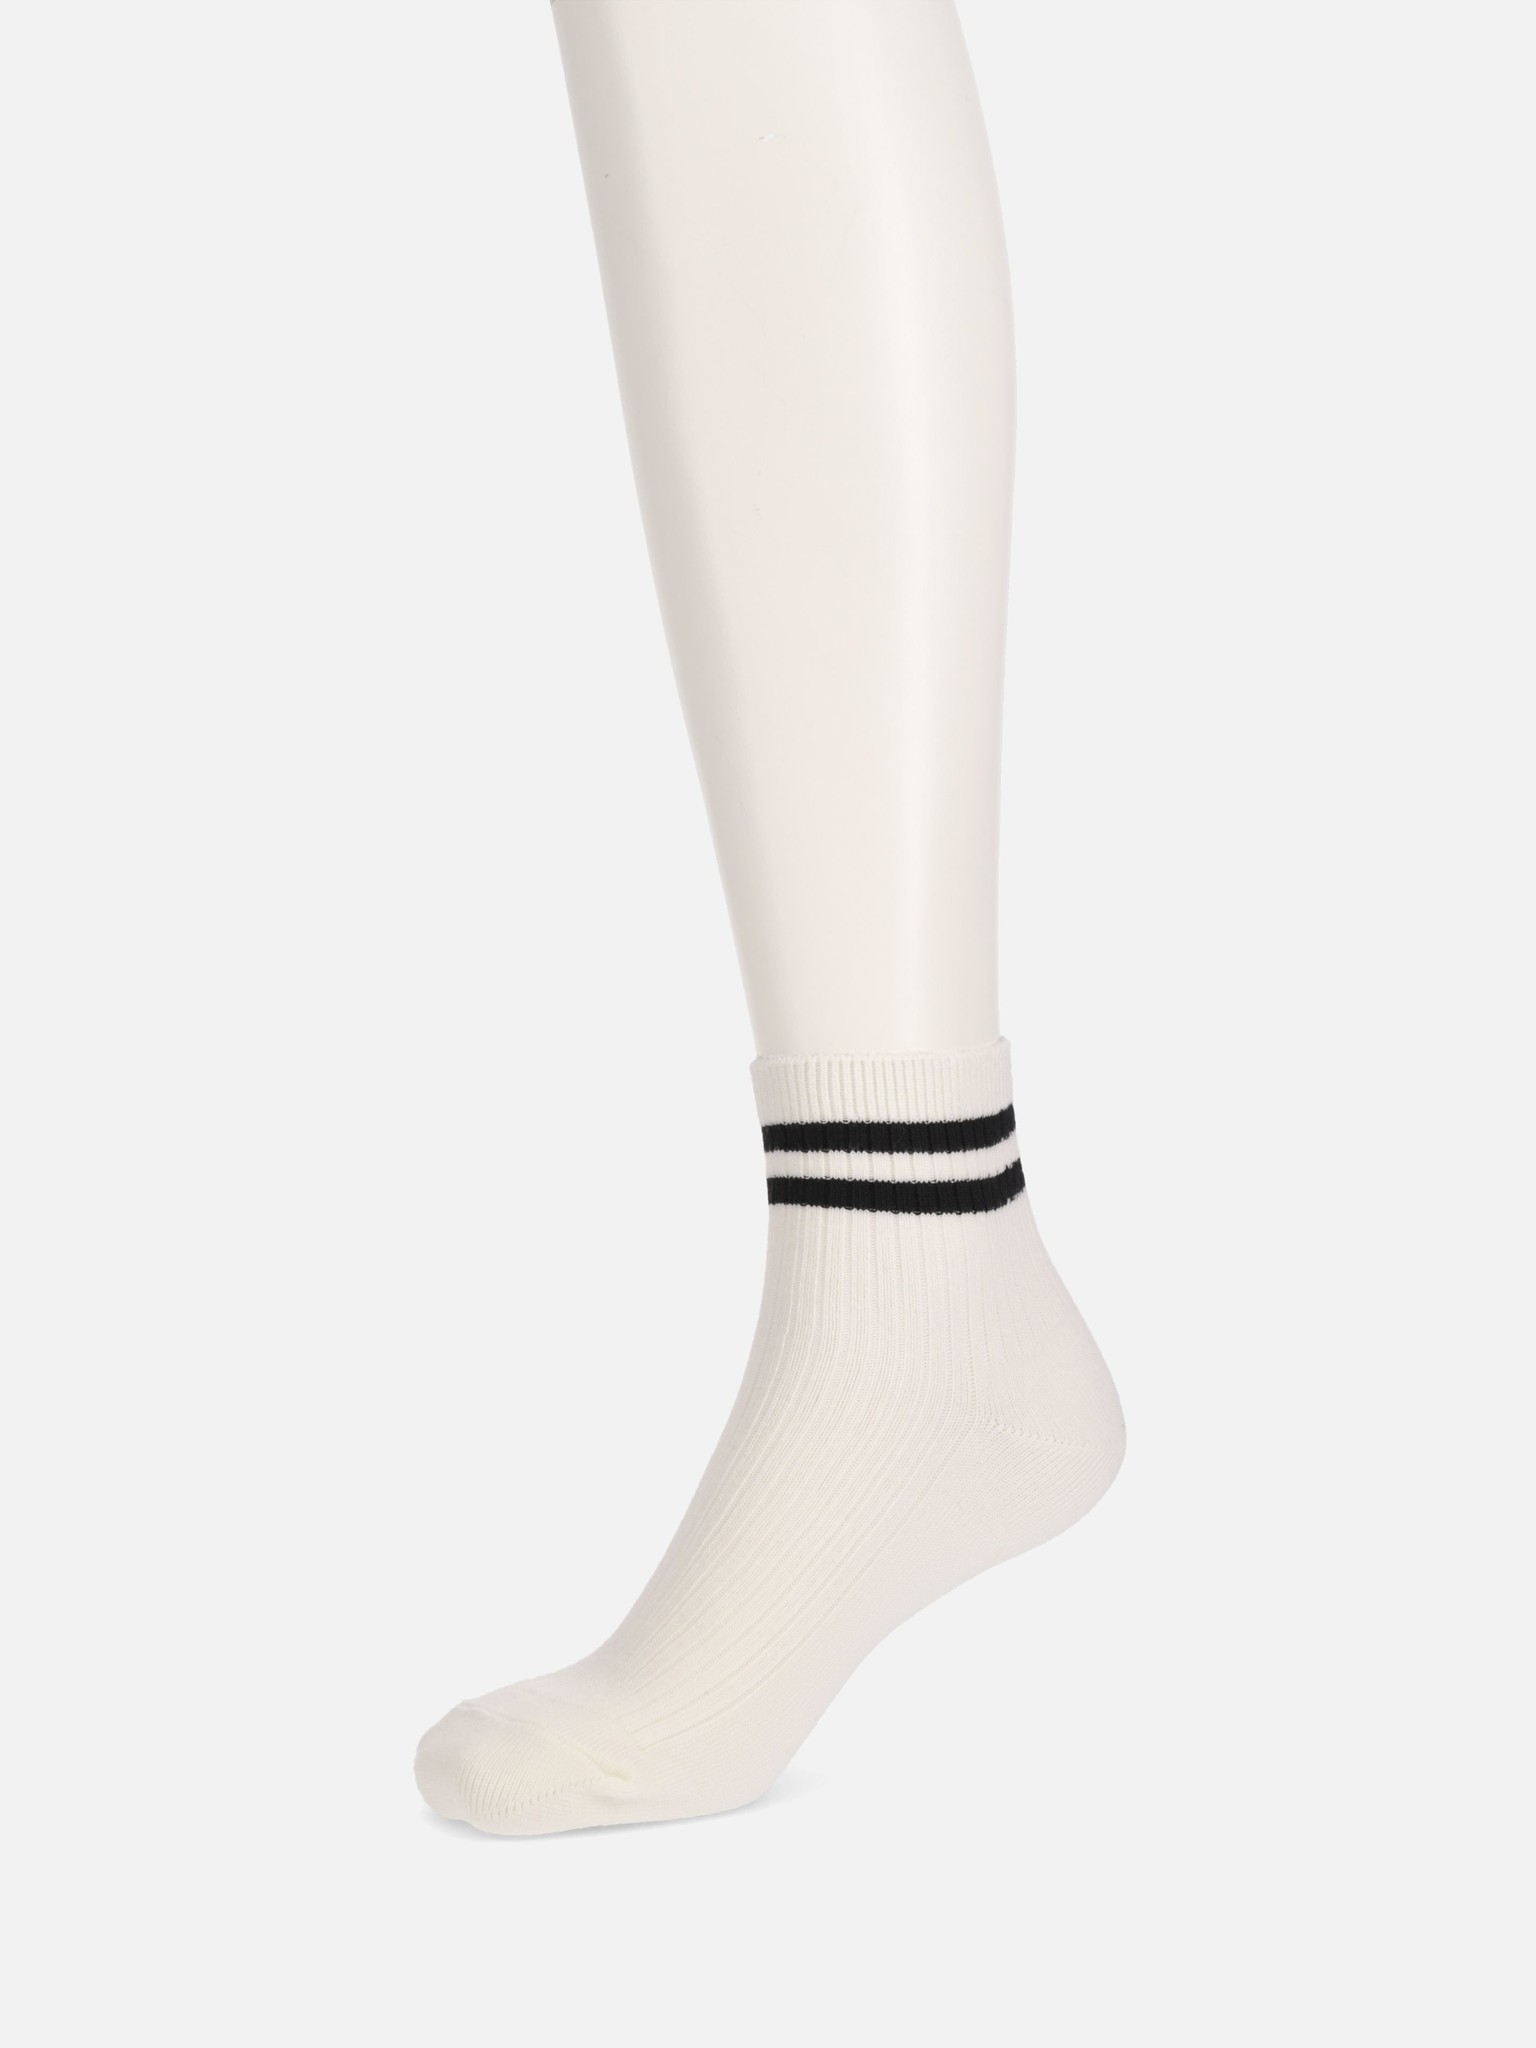 Sport bambou tennis skate chaussette blanche rayée (Femme)